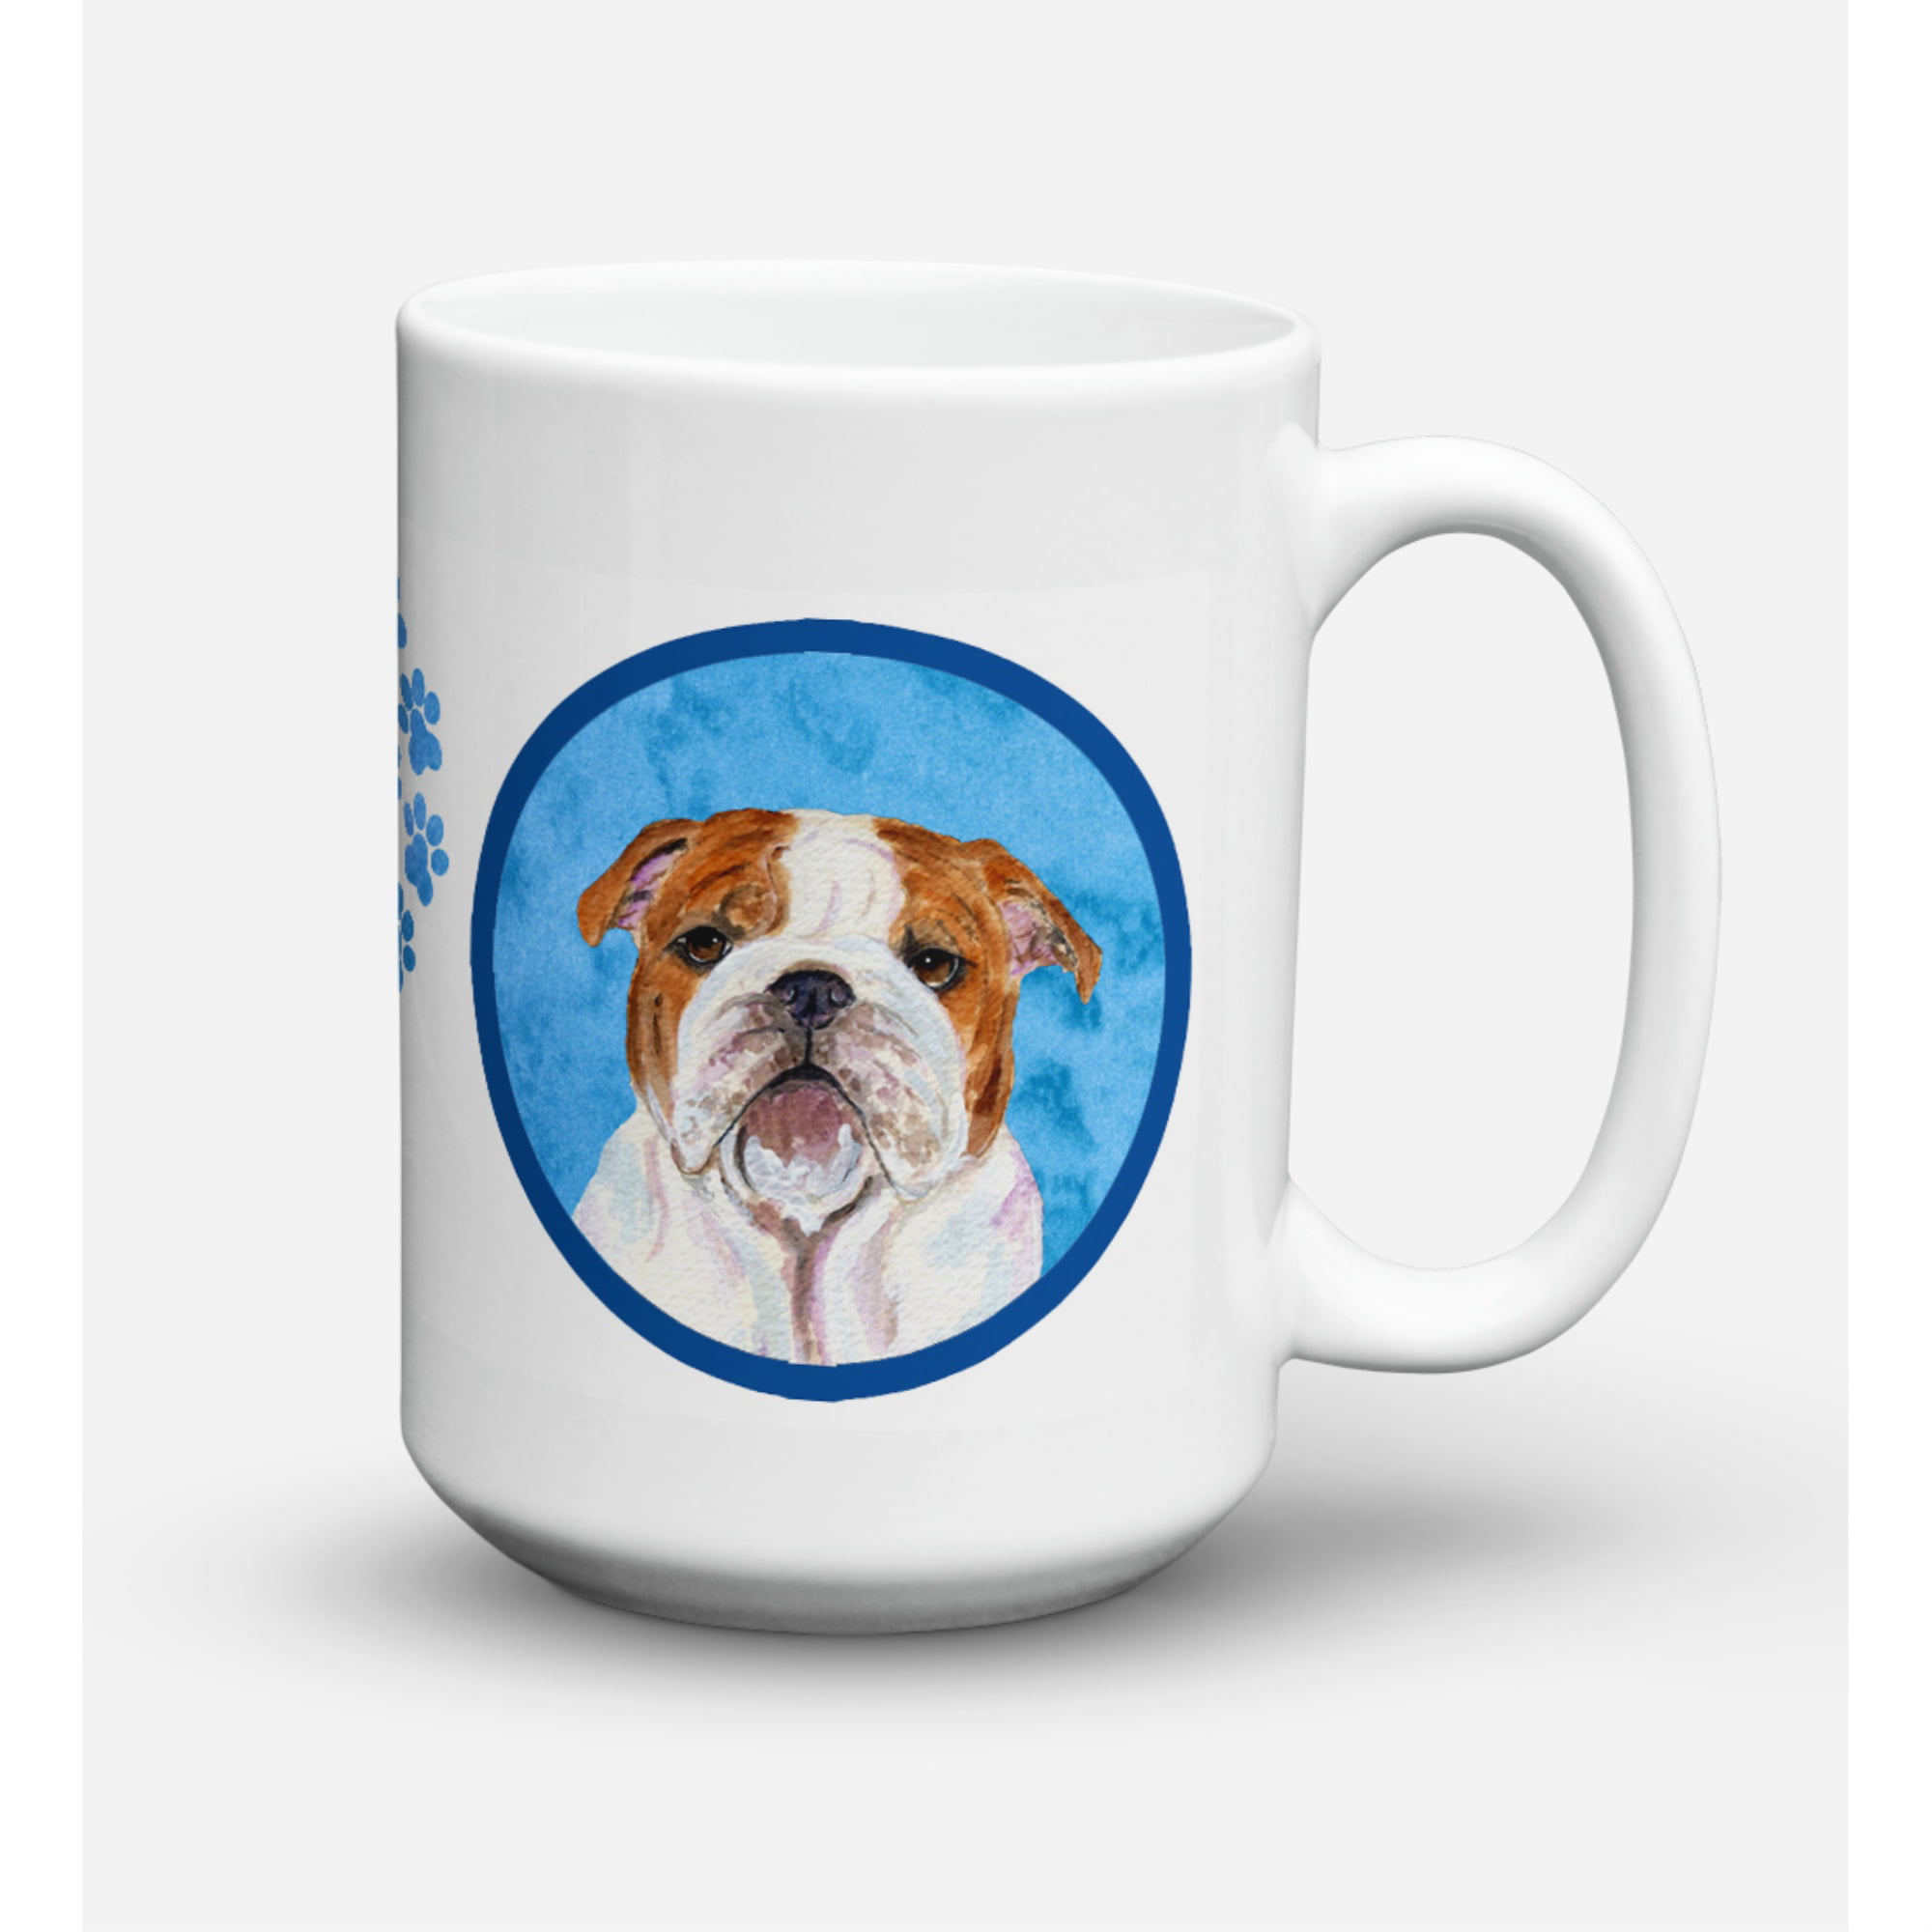 British Bulldog ceramic coffeemug tea cup 